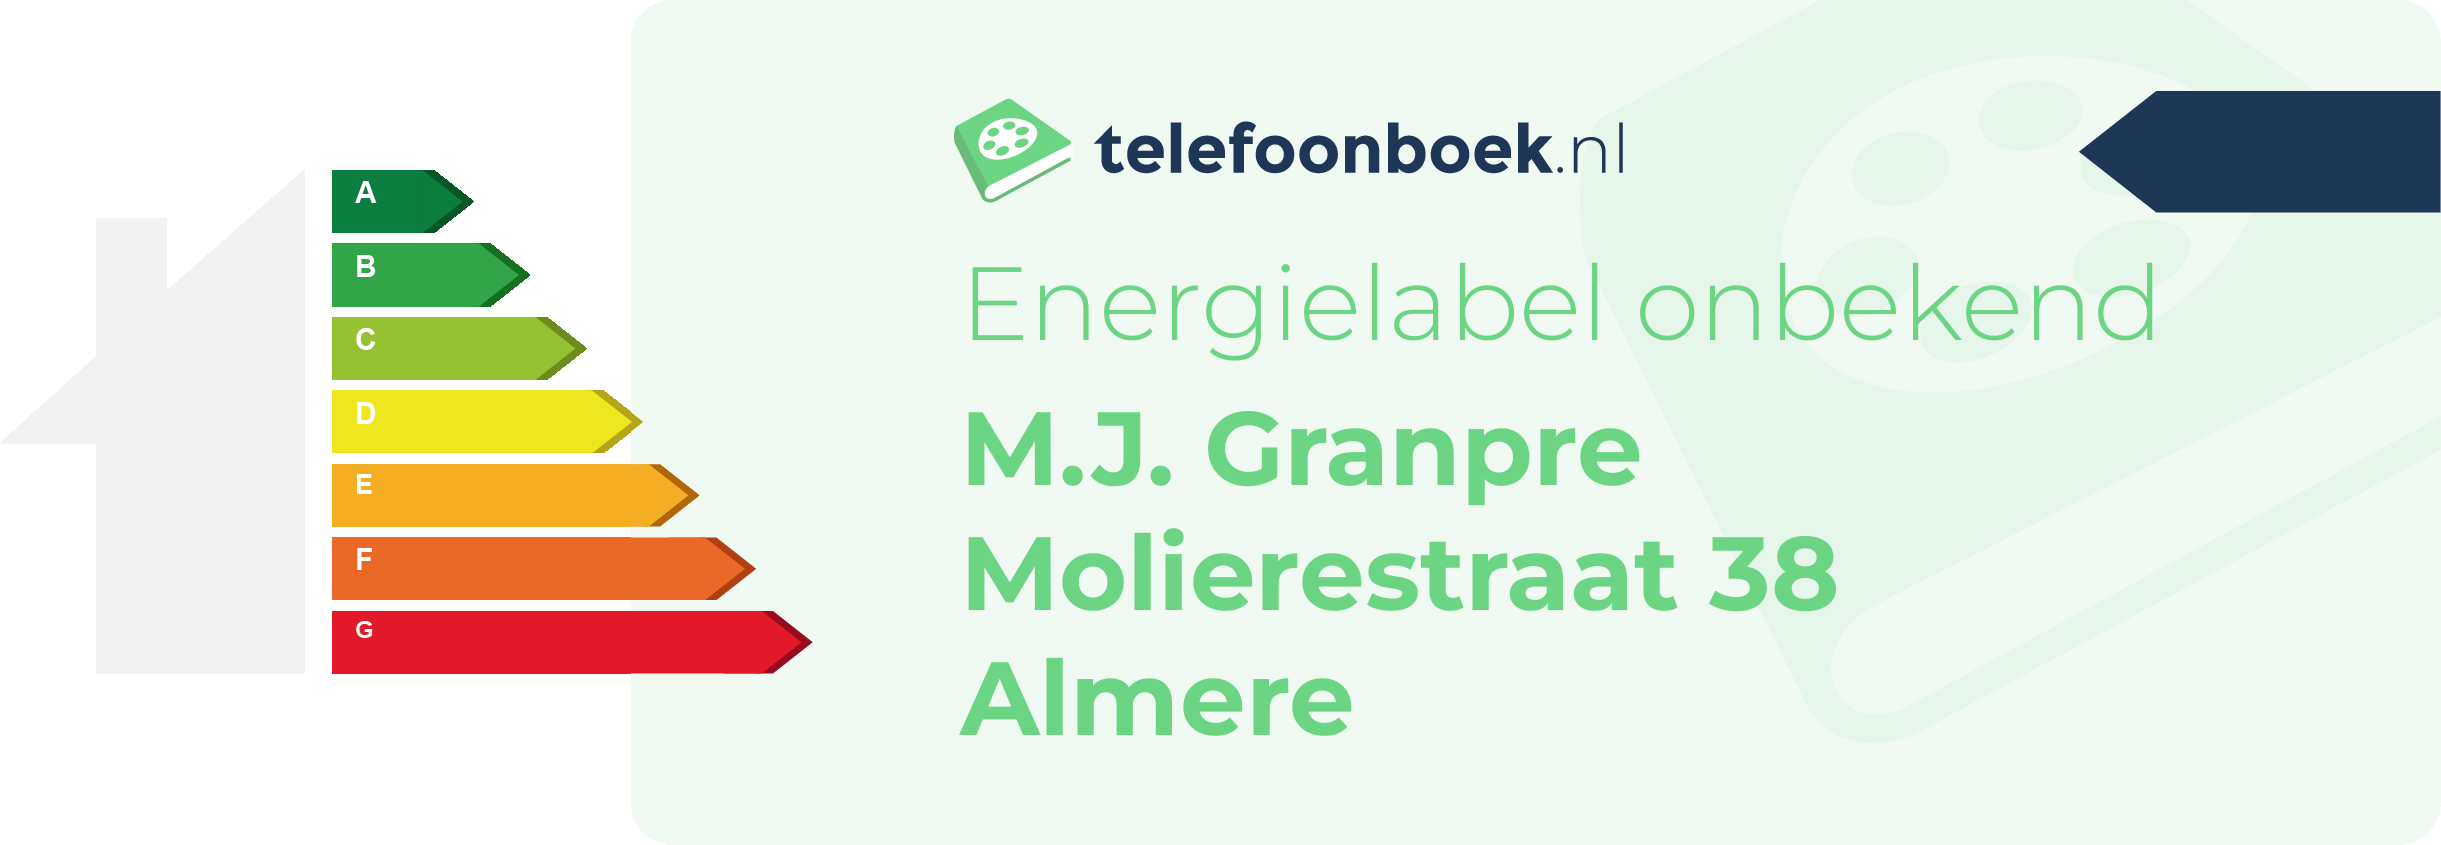 Energielabel M.J. Granpre Molierestraat 38 Almere